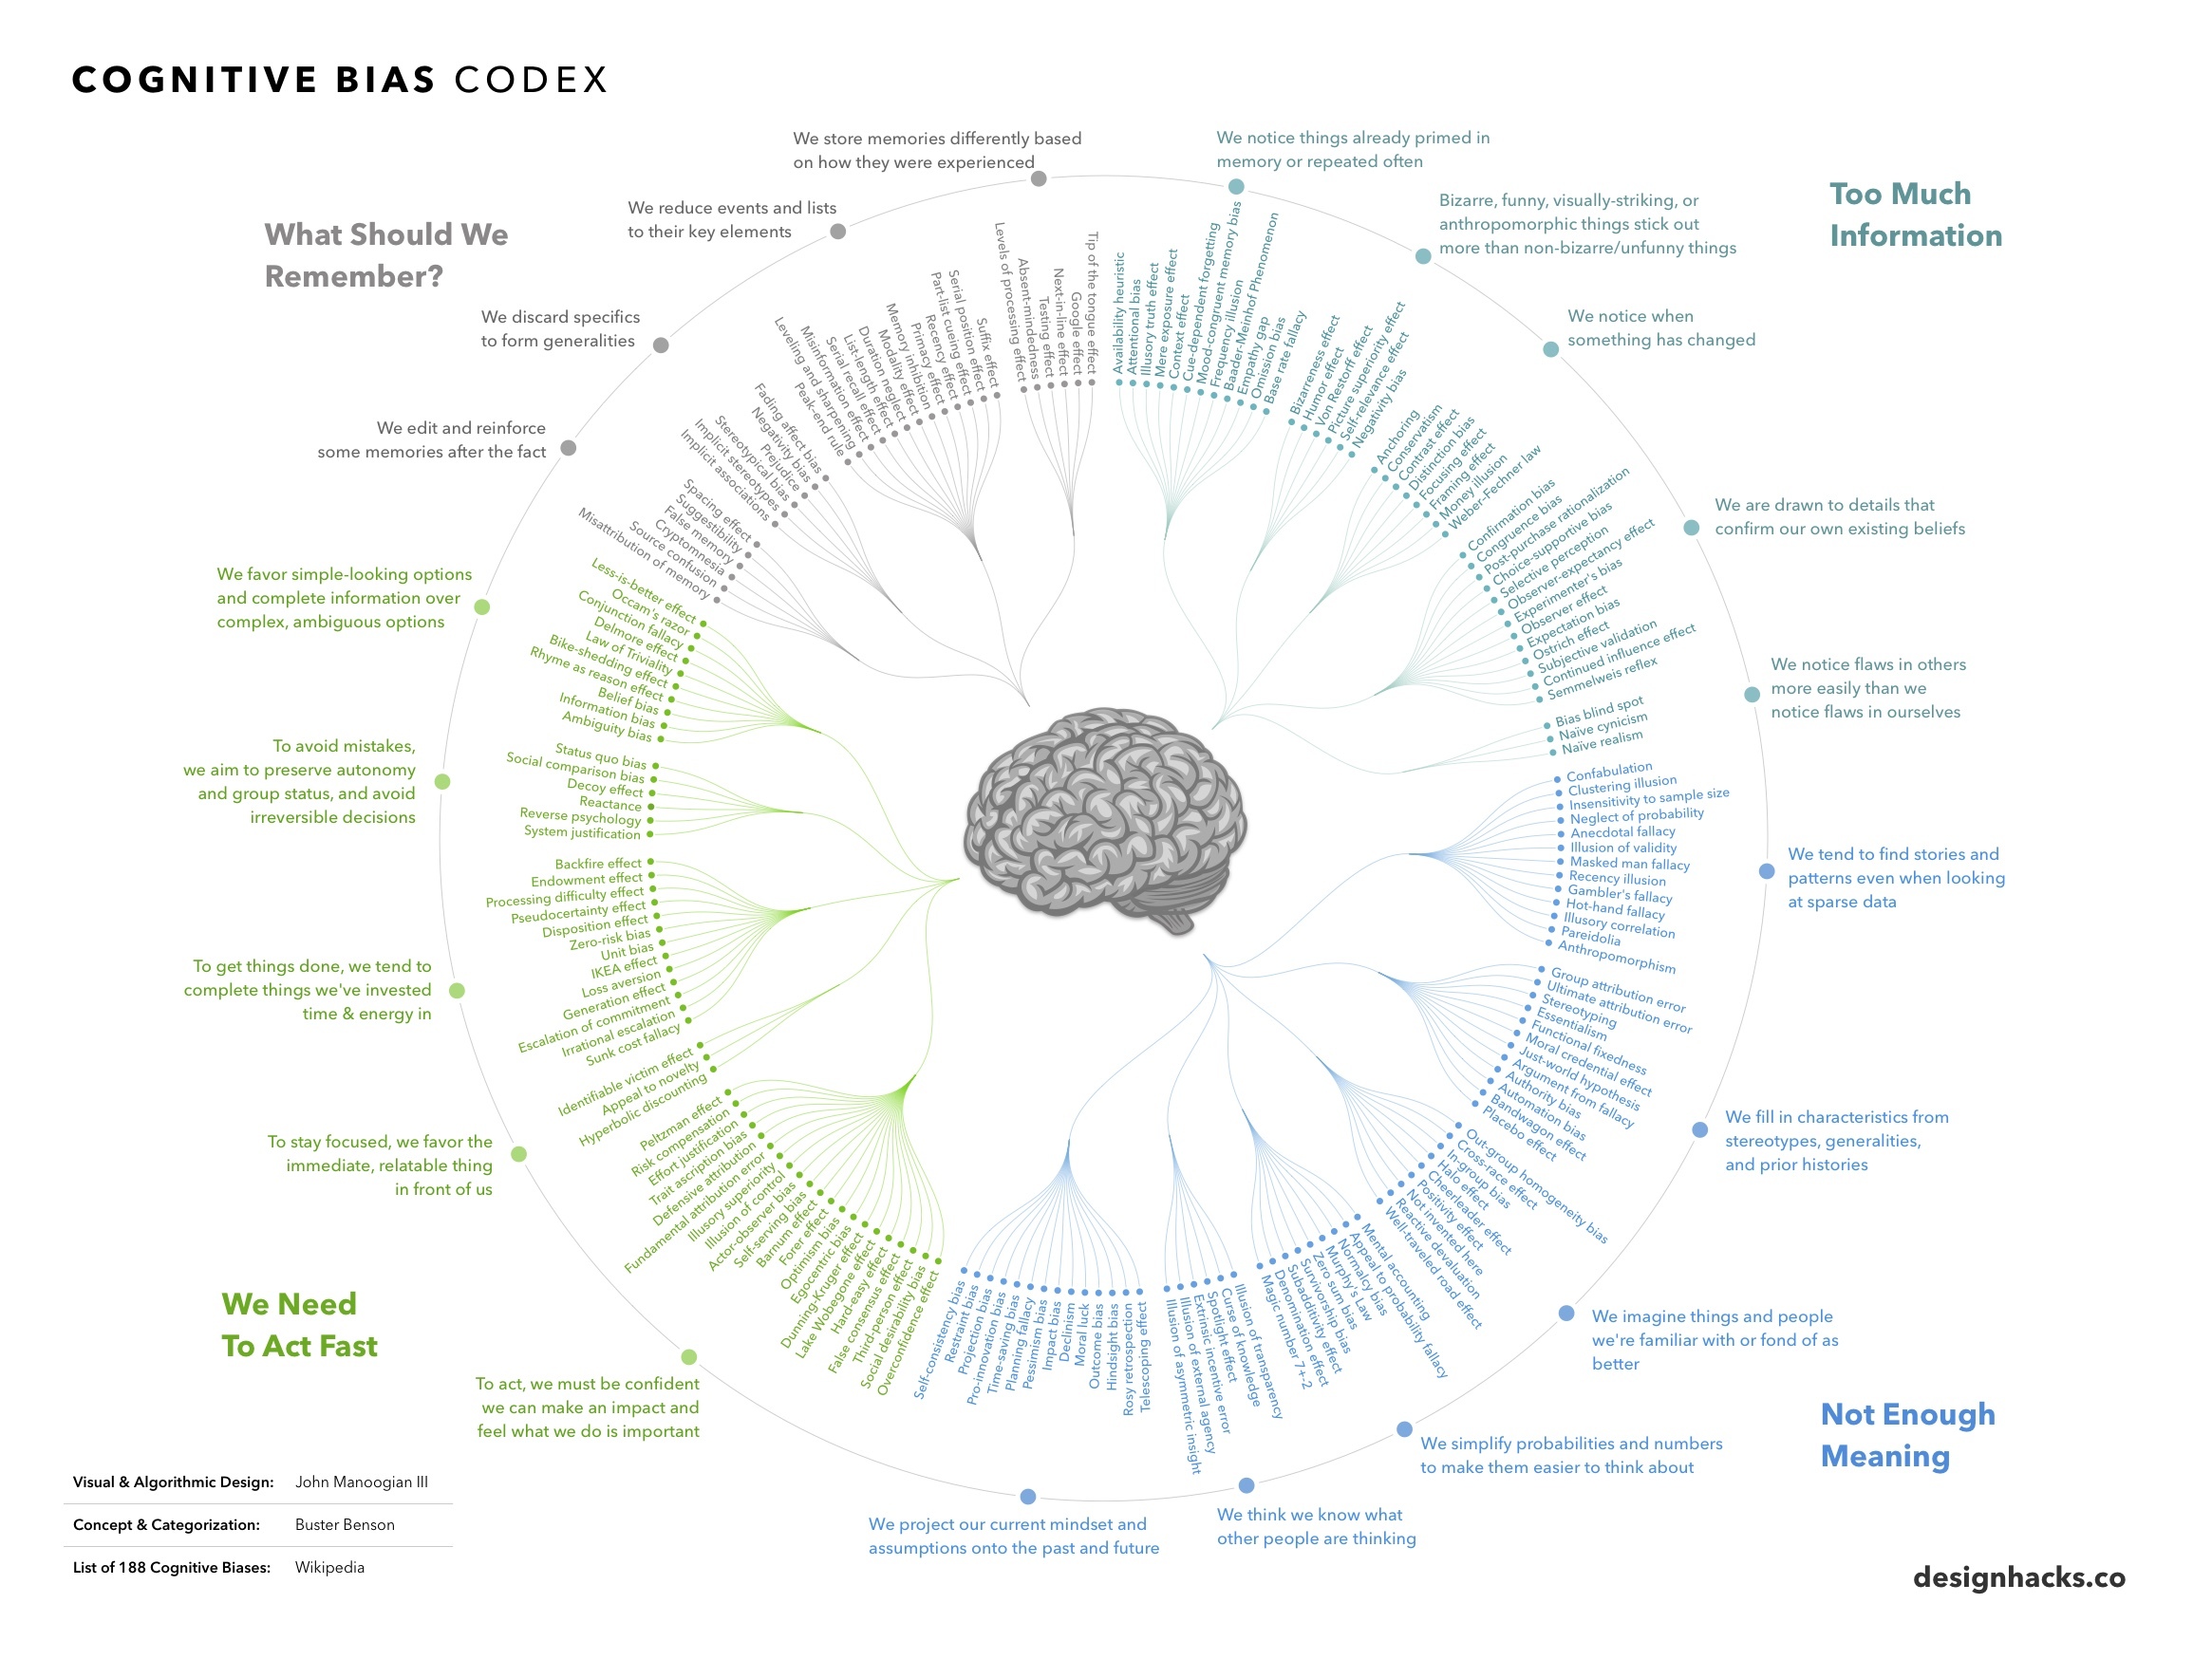 Via visual capitalist - the cognitive biases wheel